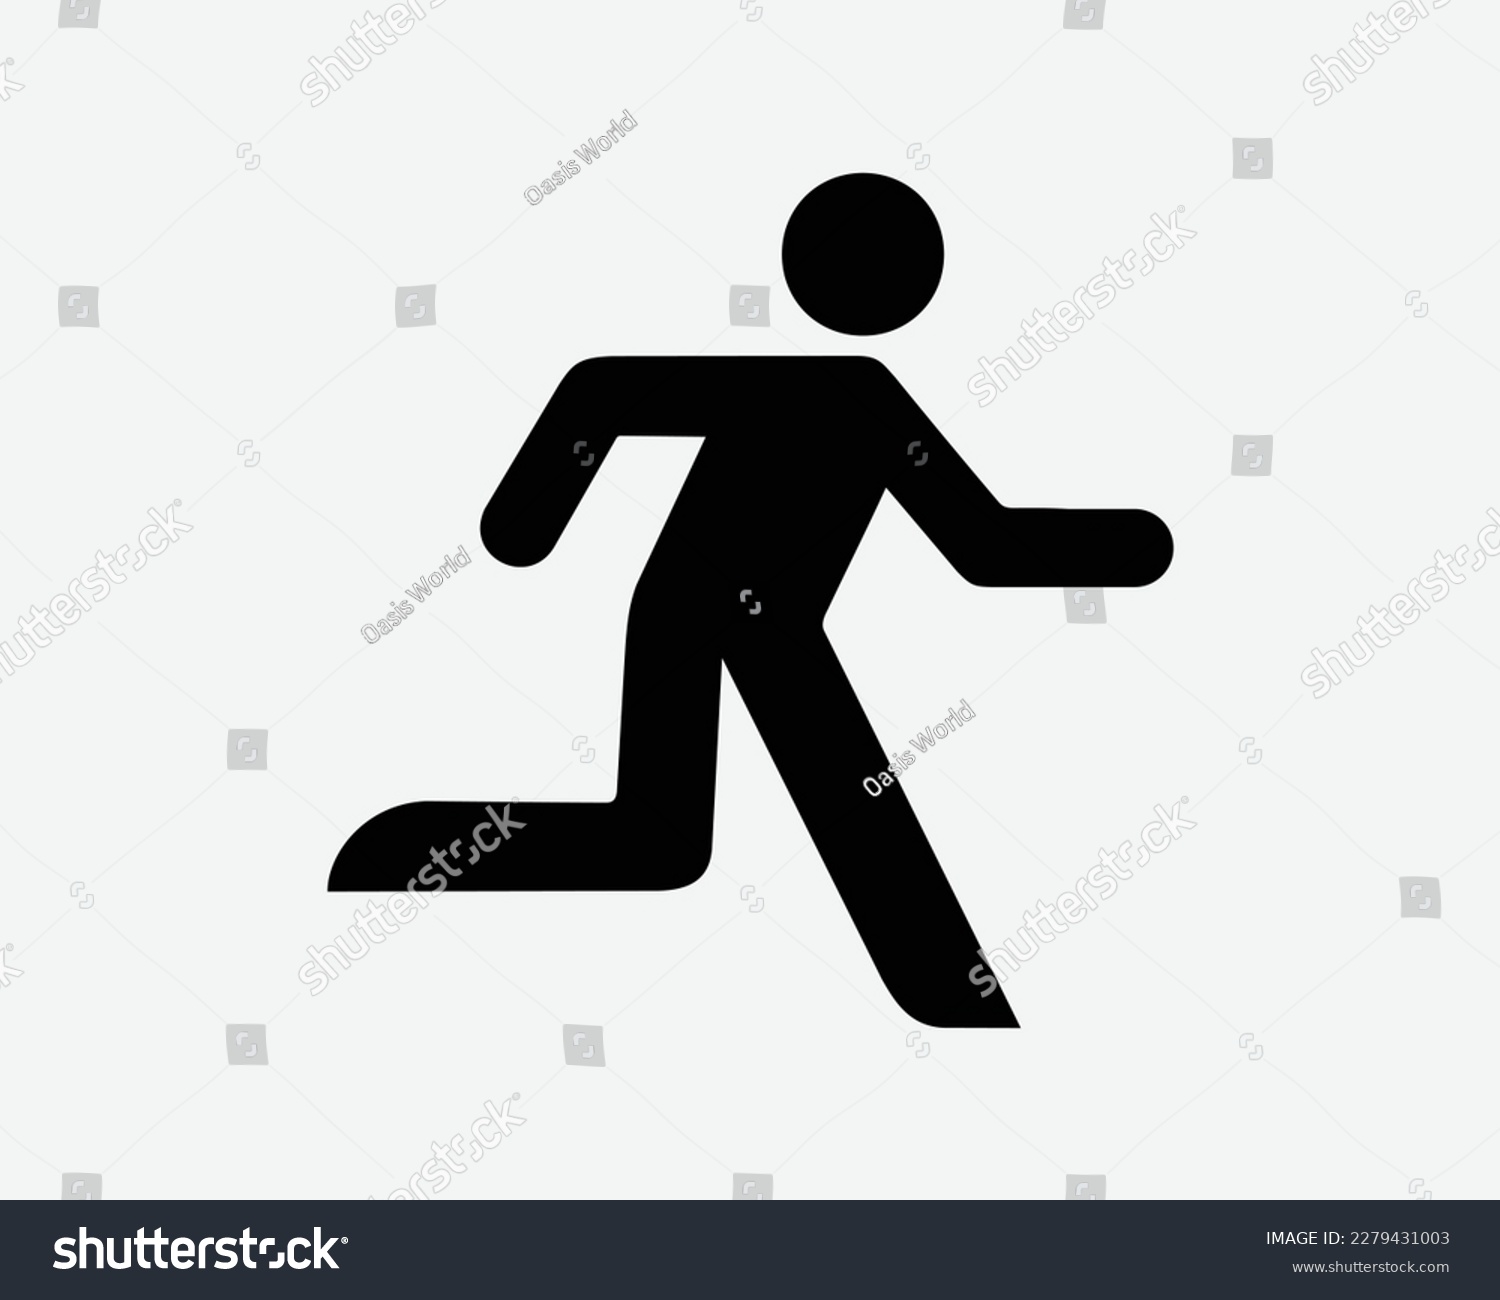 SVG of Man Running Sprinting Stick Figure Run Sprint Jog Jogging Black and White Sign Symbol Icon Vector Graphic Clipart Illustration Artwork Pictogram svg